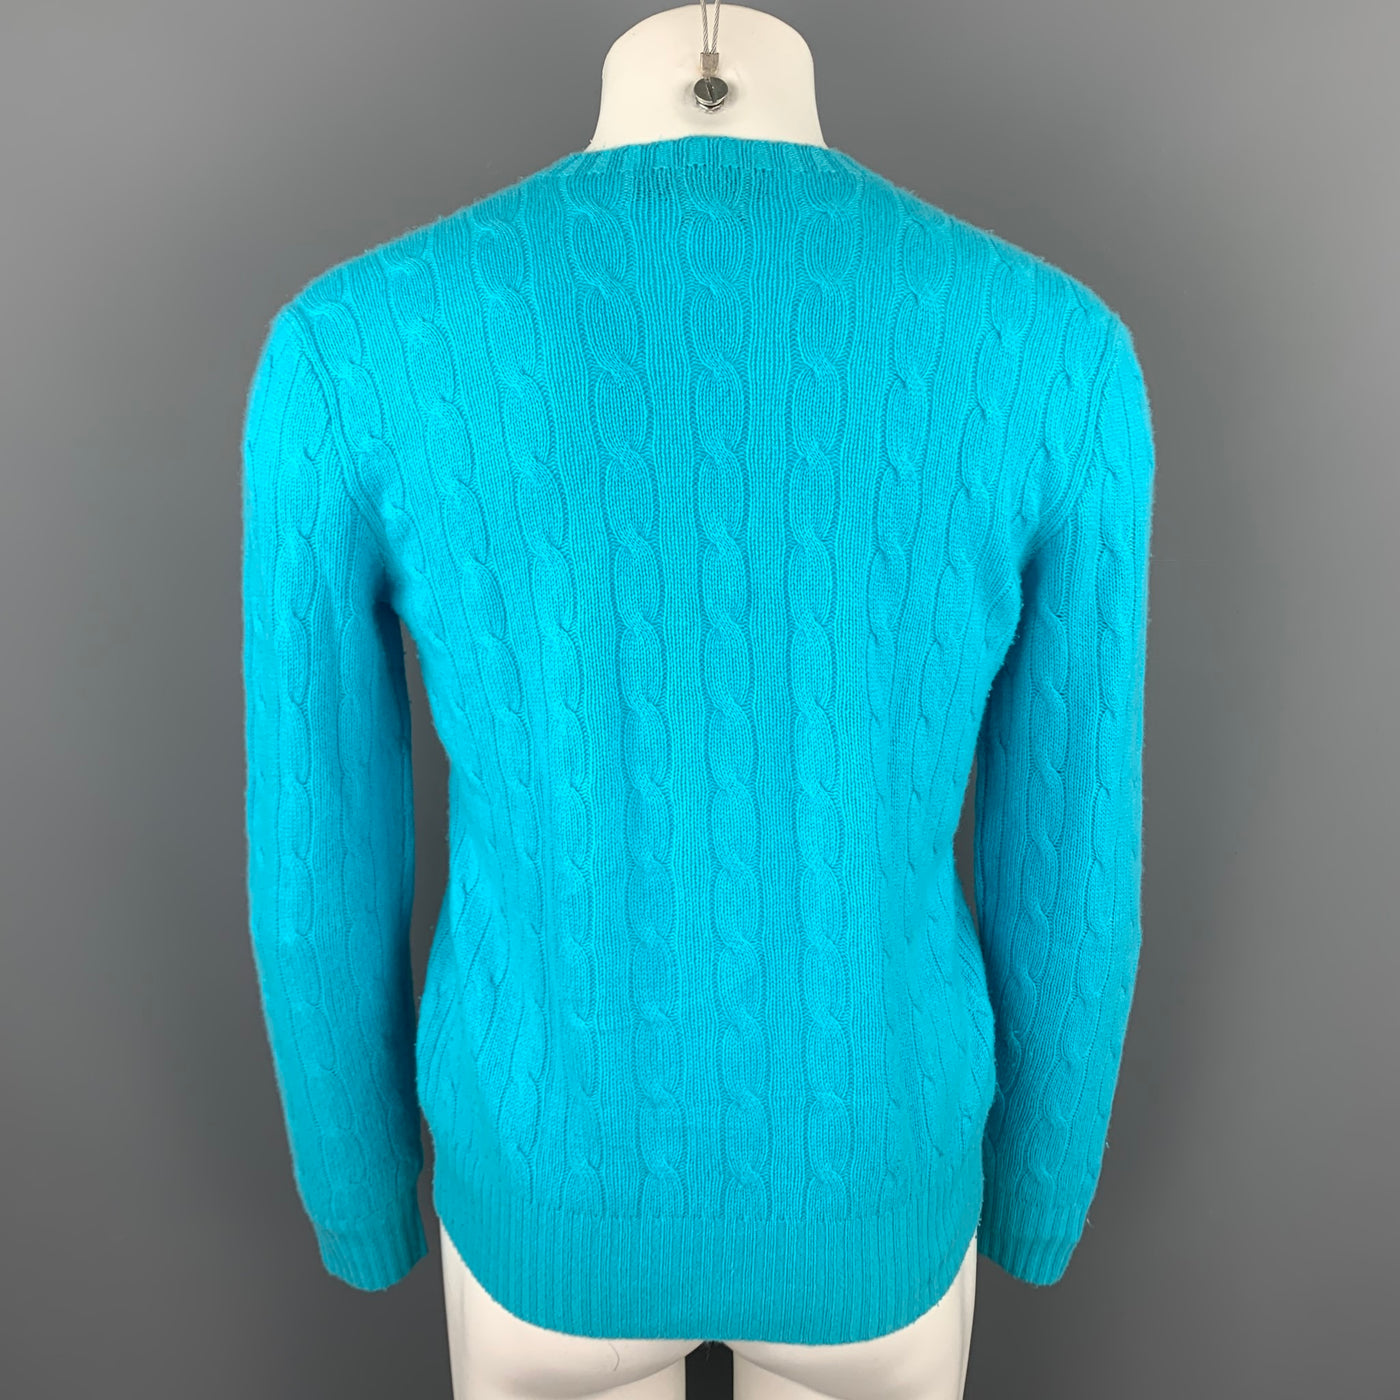 POLO by RALPH LAUREN Size M Aqua Cable Knit Cashmere Crew-Neck Sweater